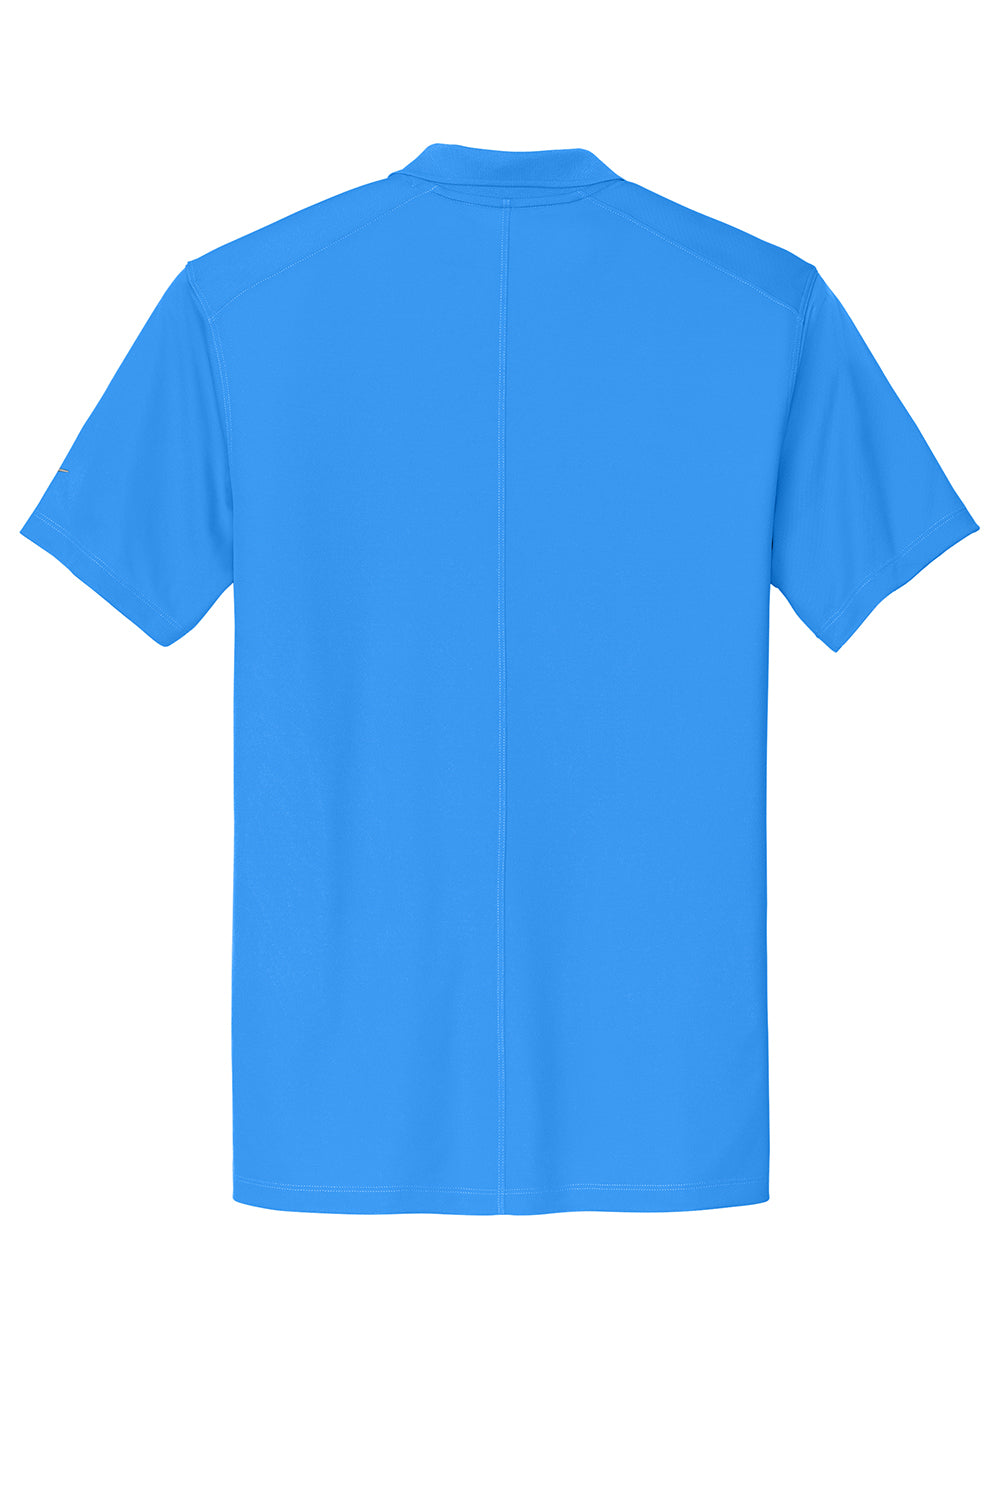 Nike NKDX6684 Mens Victory Dri-Fit Moisture Wicking Short Sleeve Polo Shirt Light Photo Blue Flat Back